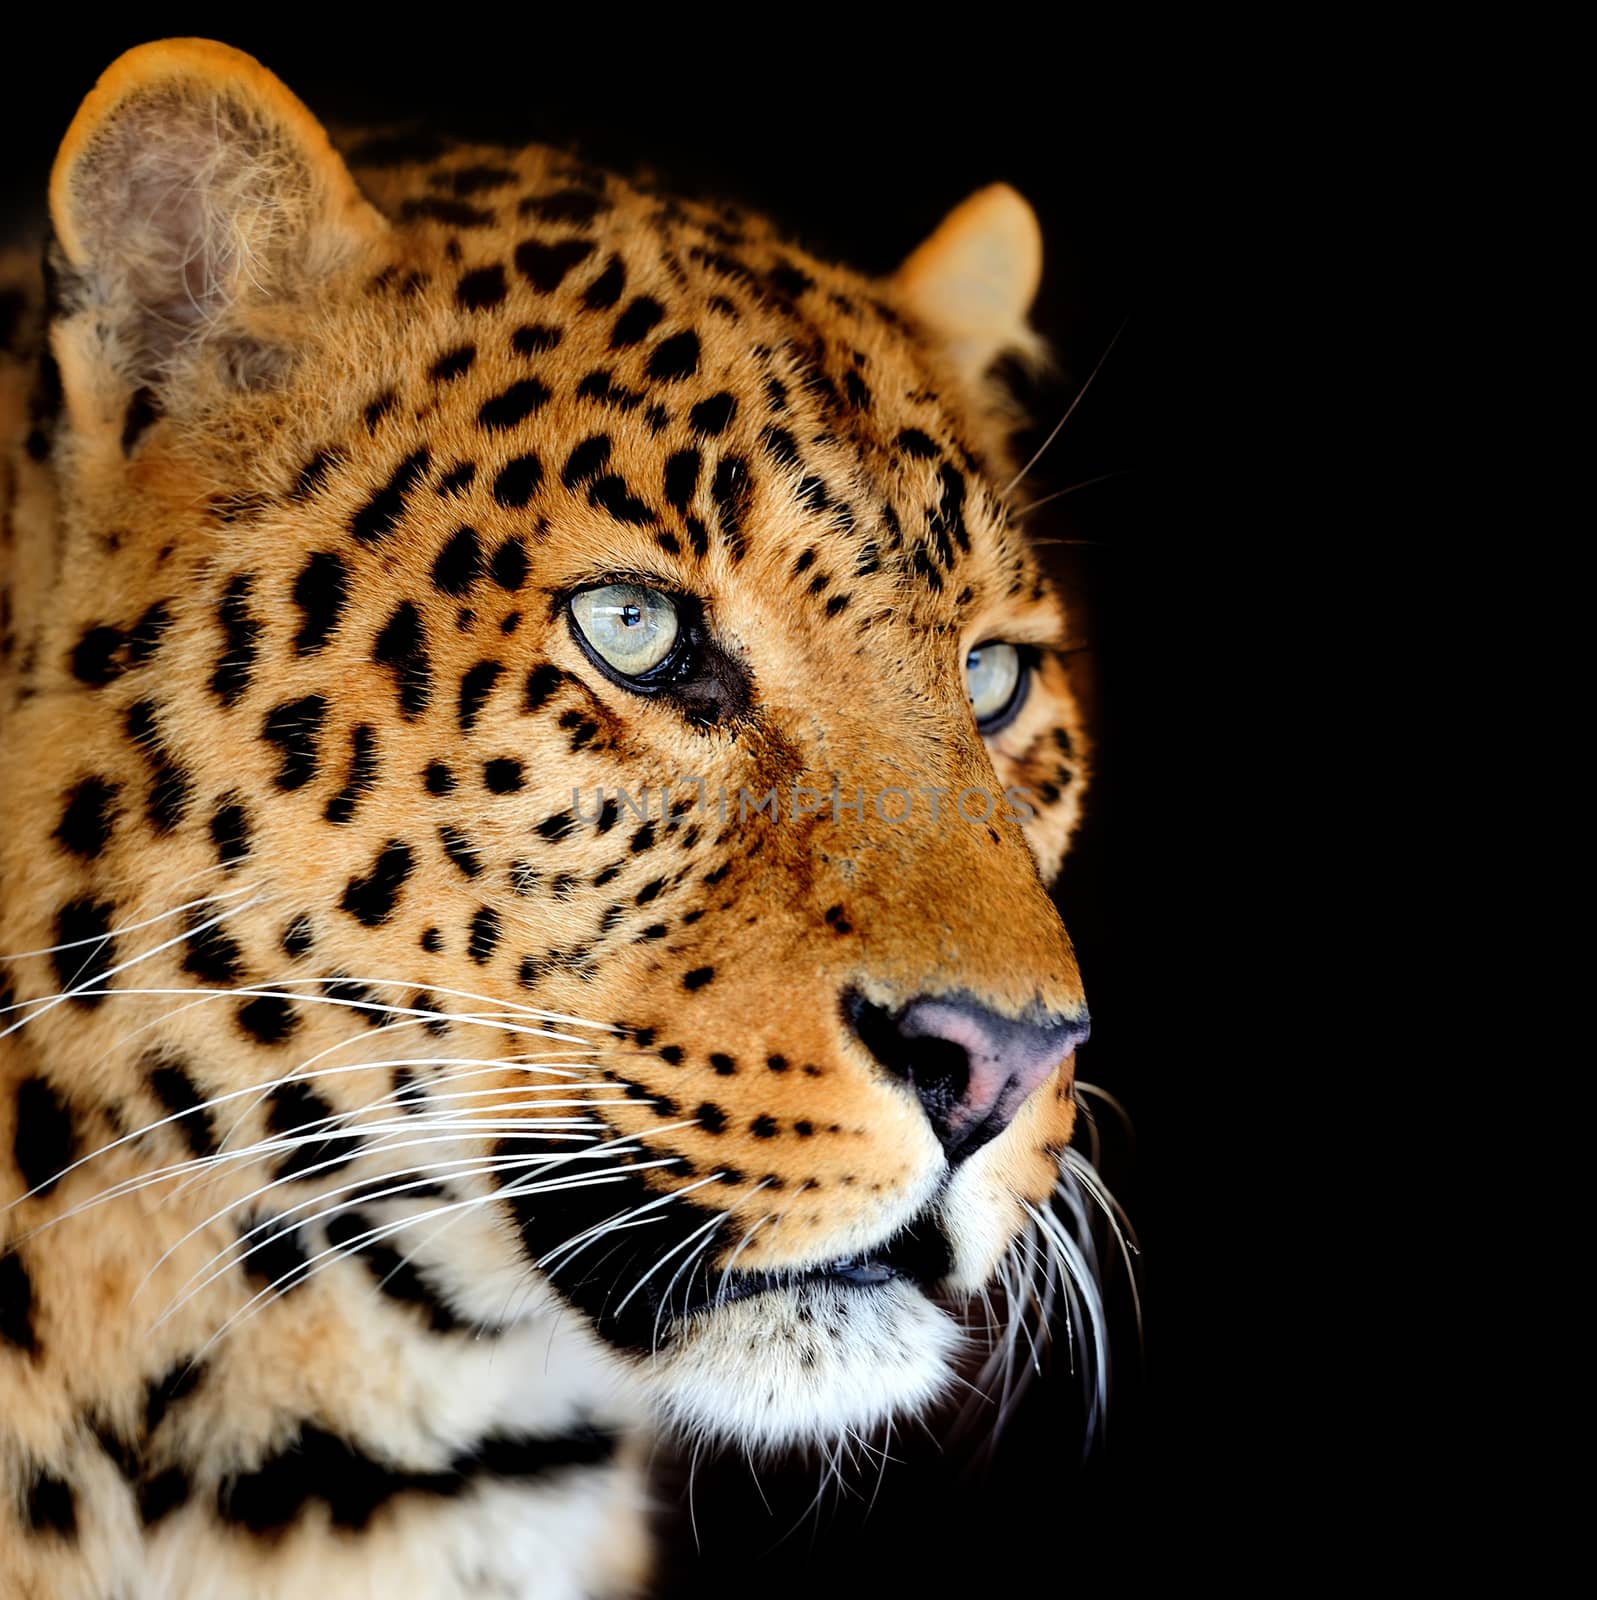 Leopard portrait by byrdyak